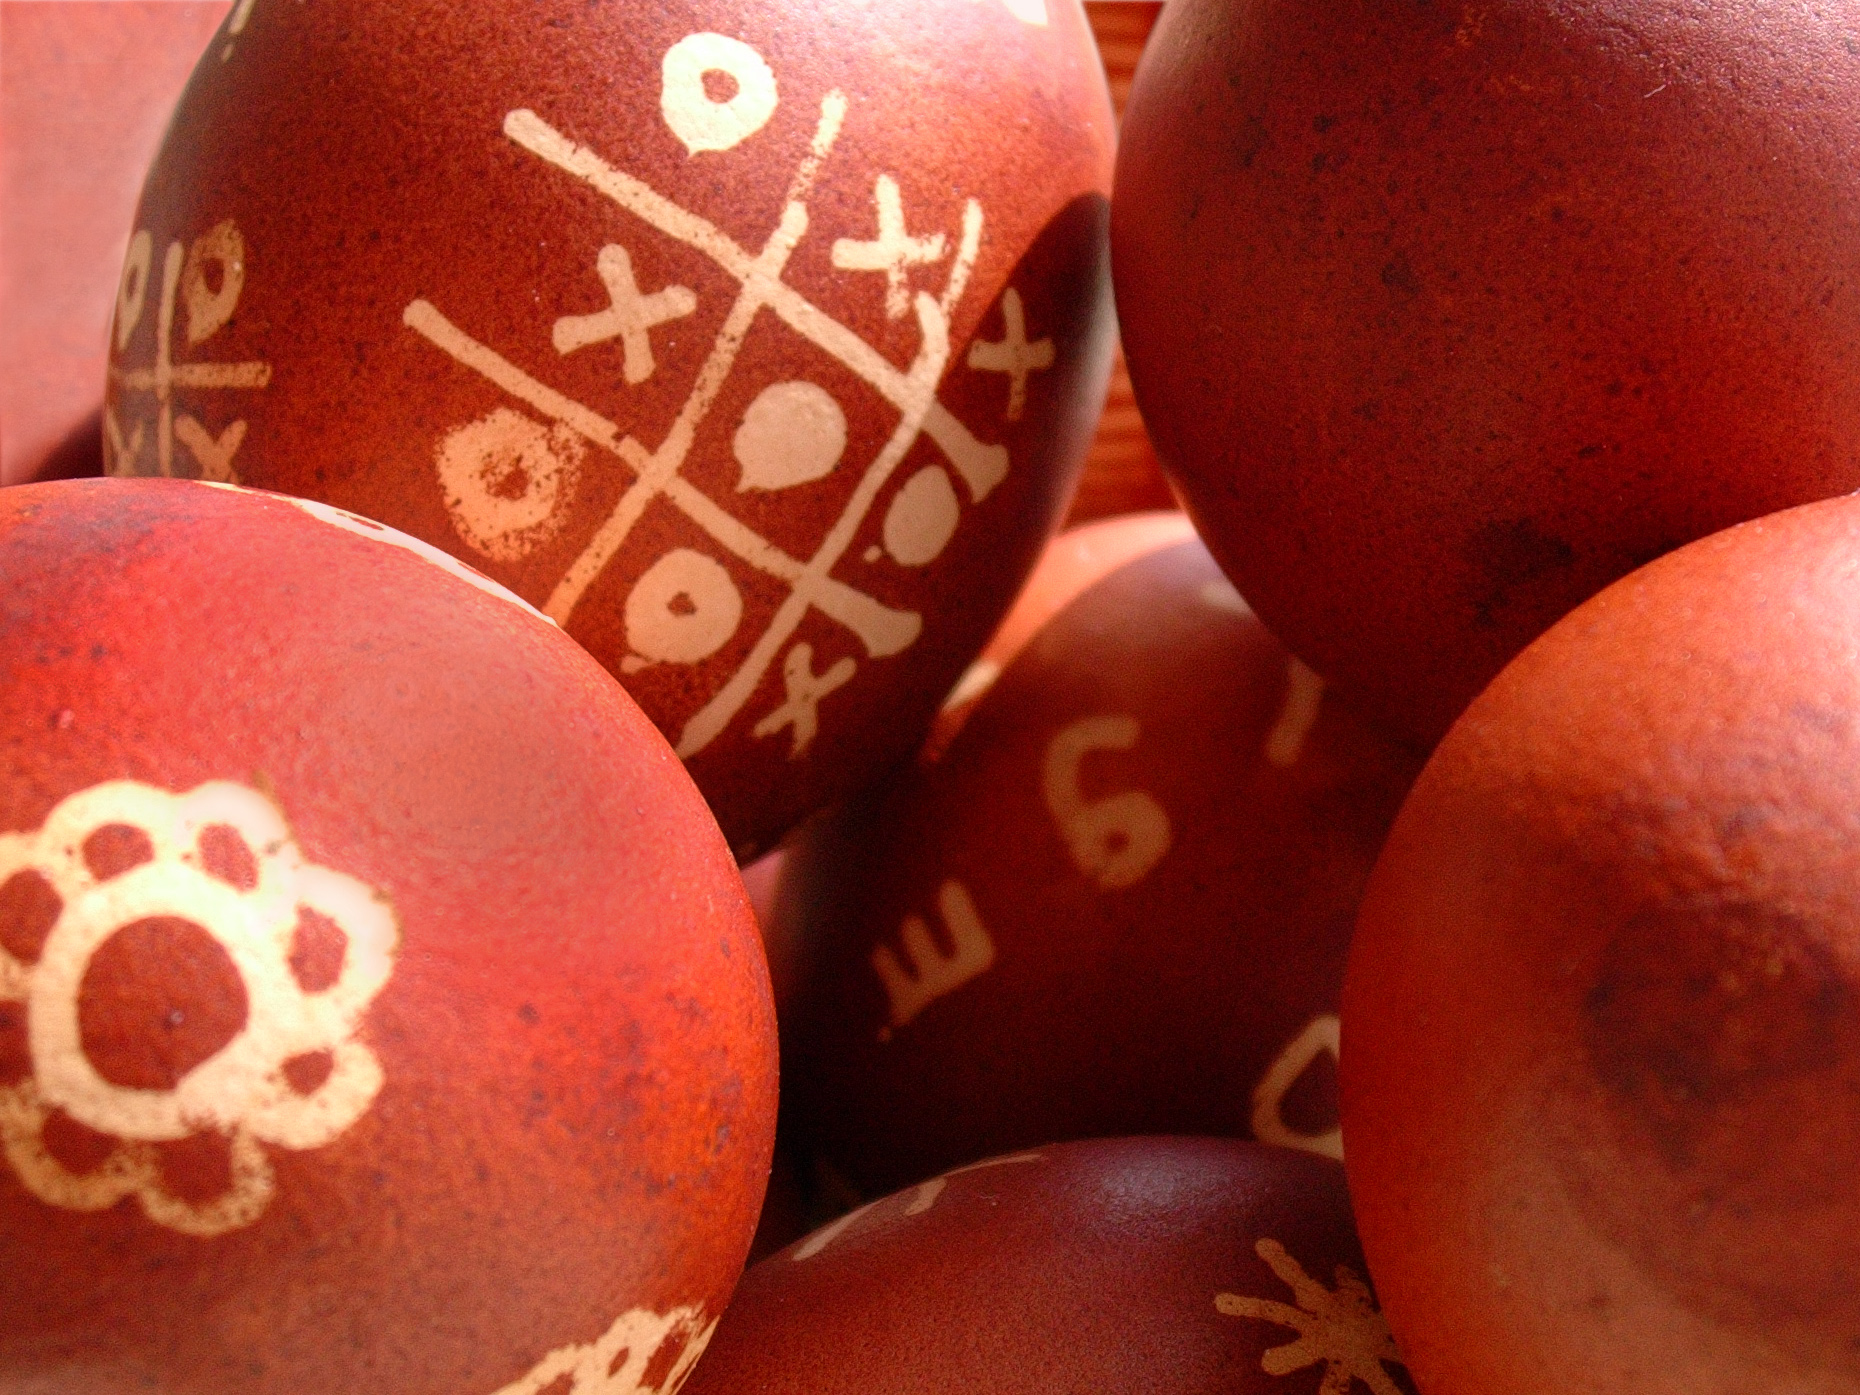 Easter eggs photo